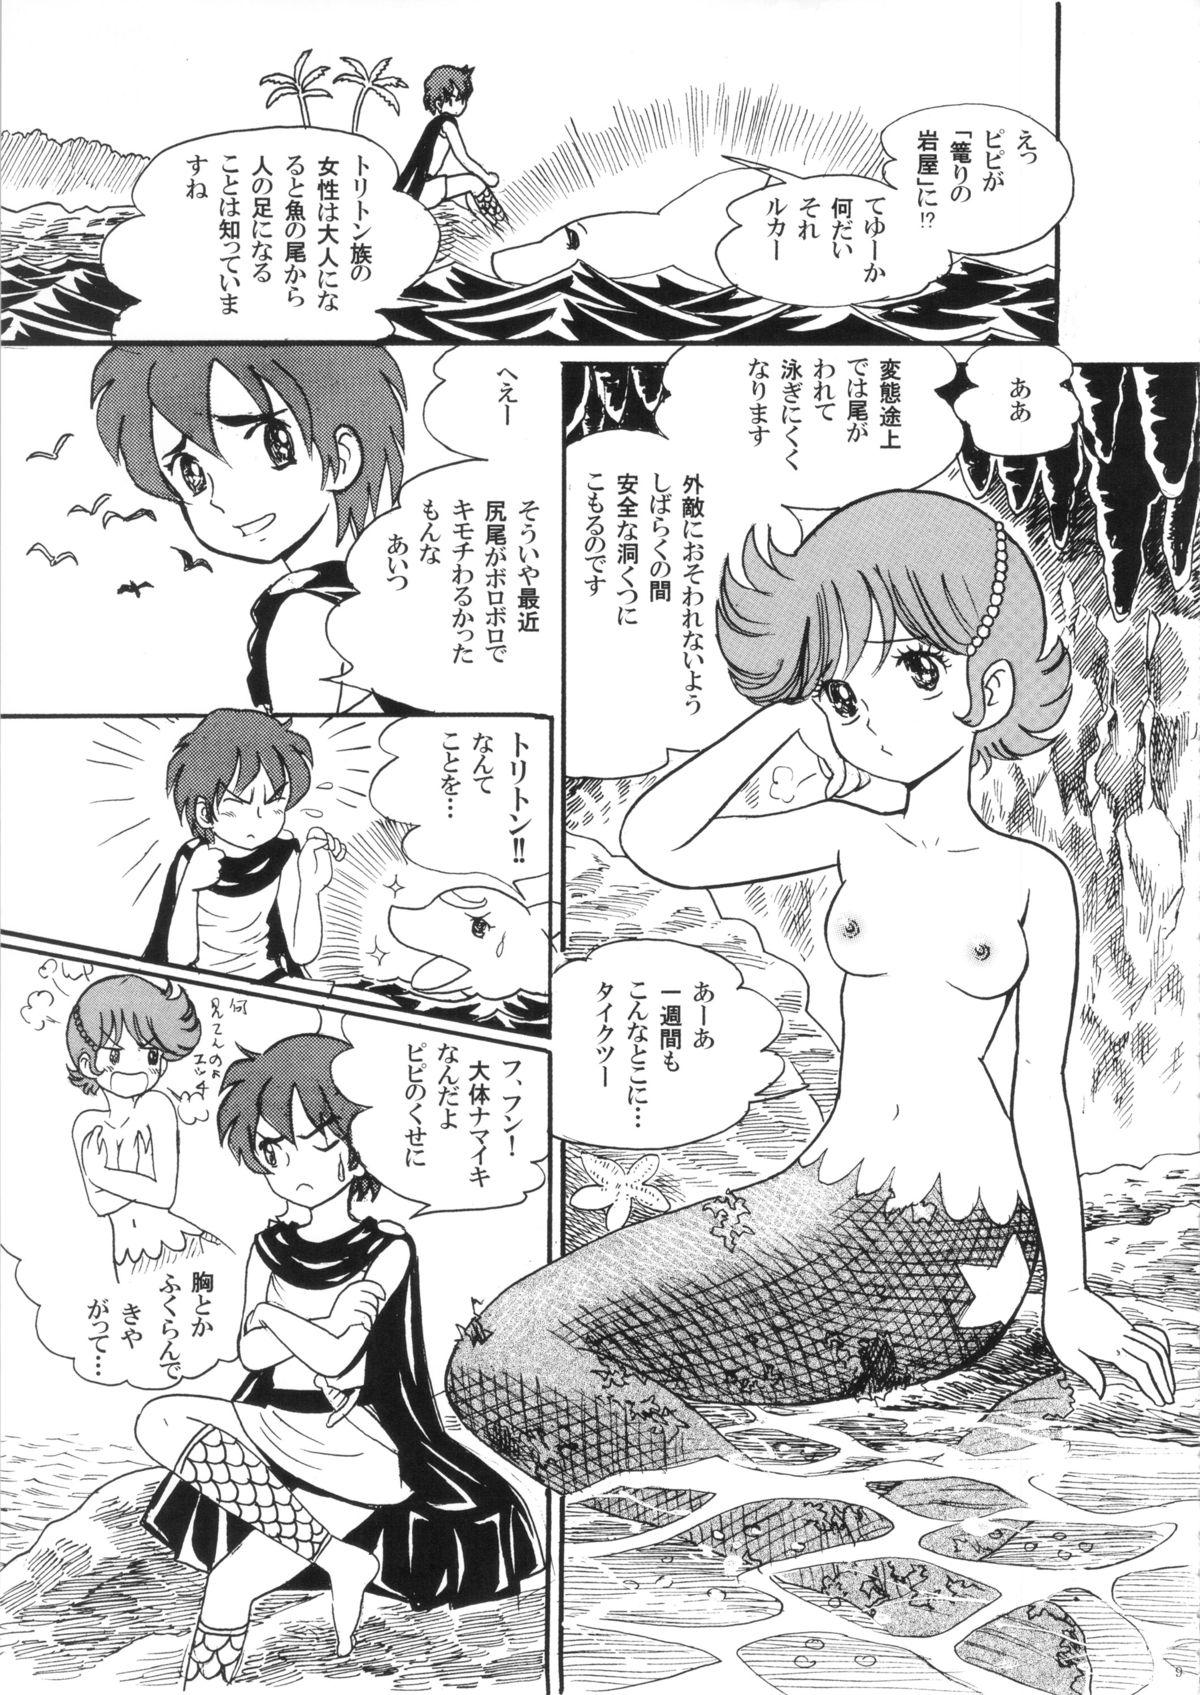 FLOUR2 Tezuka Manga Graffiti 8